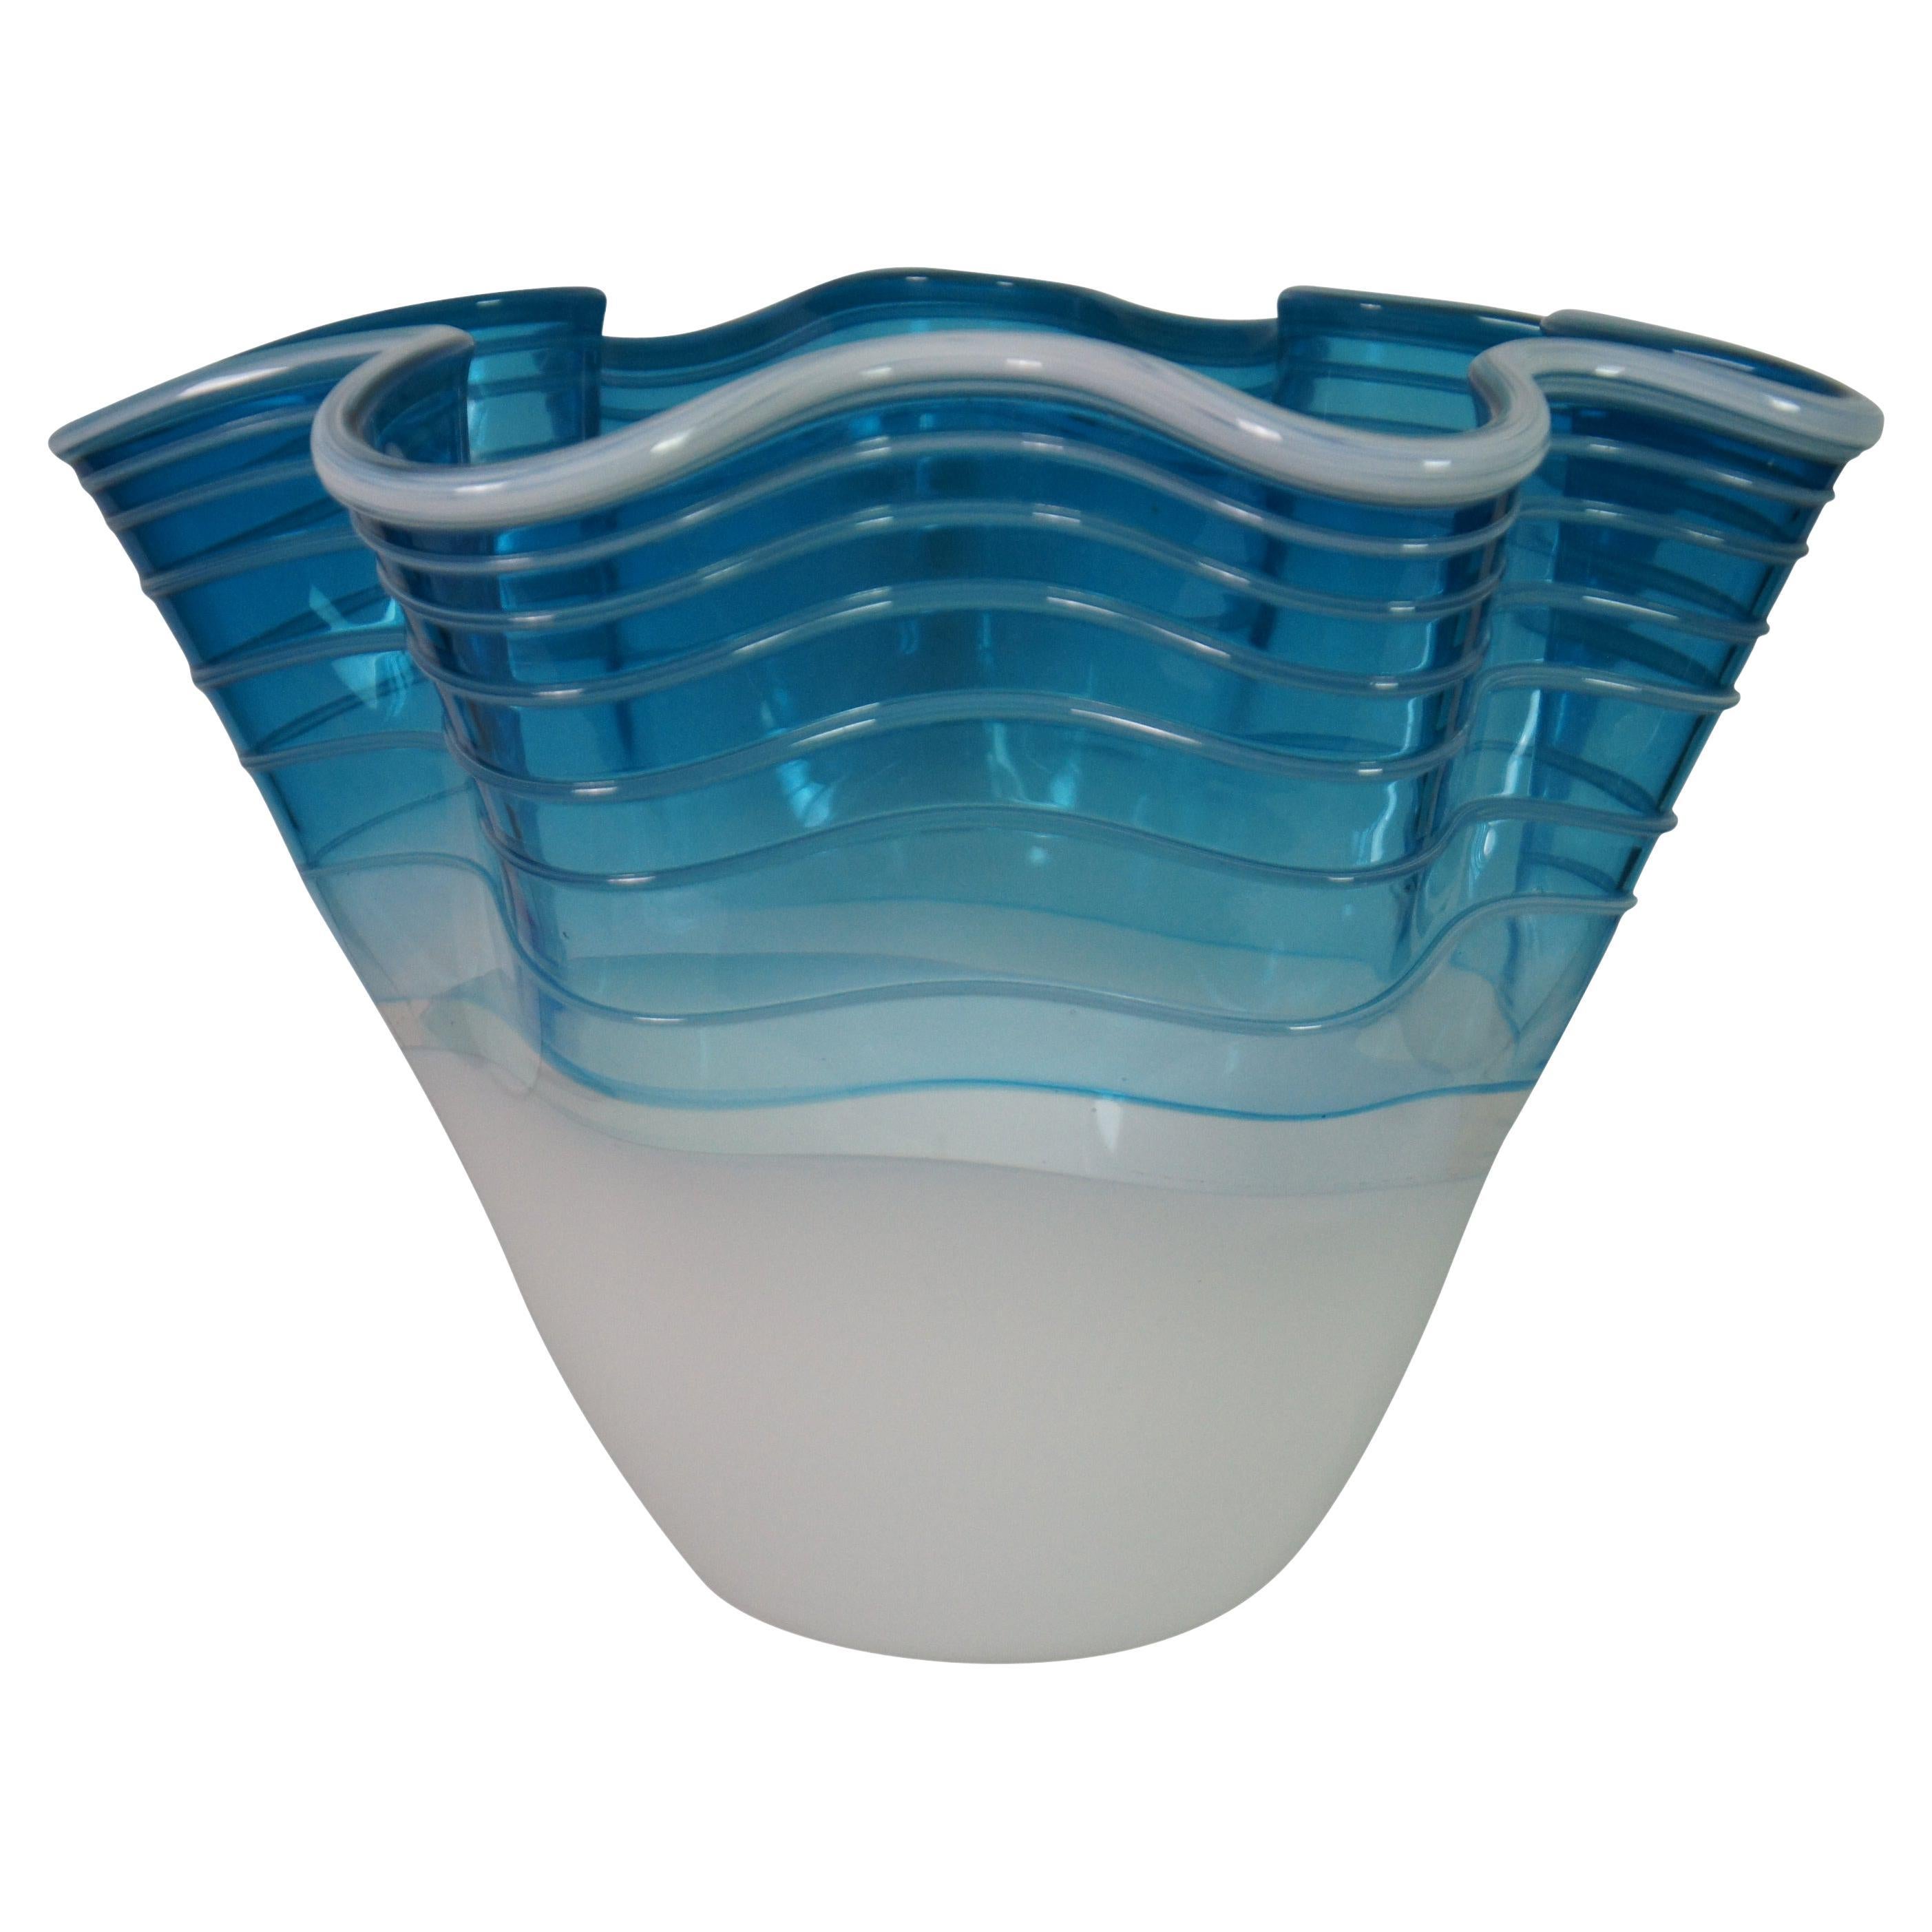 Signed Freeform Studio Art Glass Centerpiece Bowl Vase Teal Blue Ruffle 15" For Sale